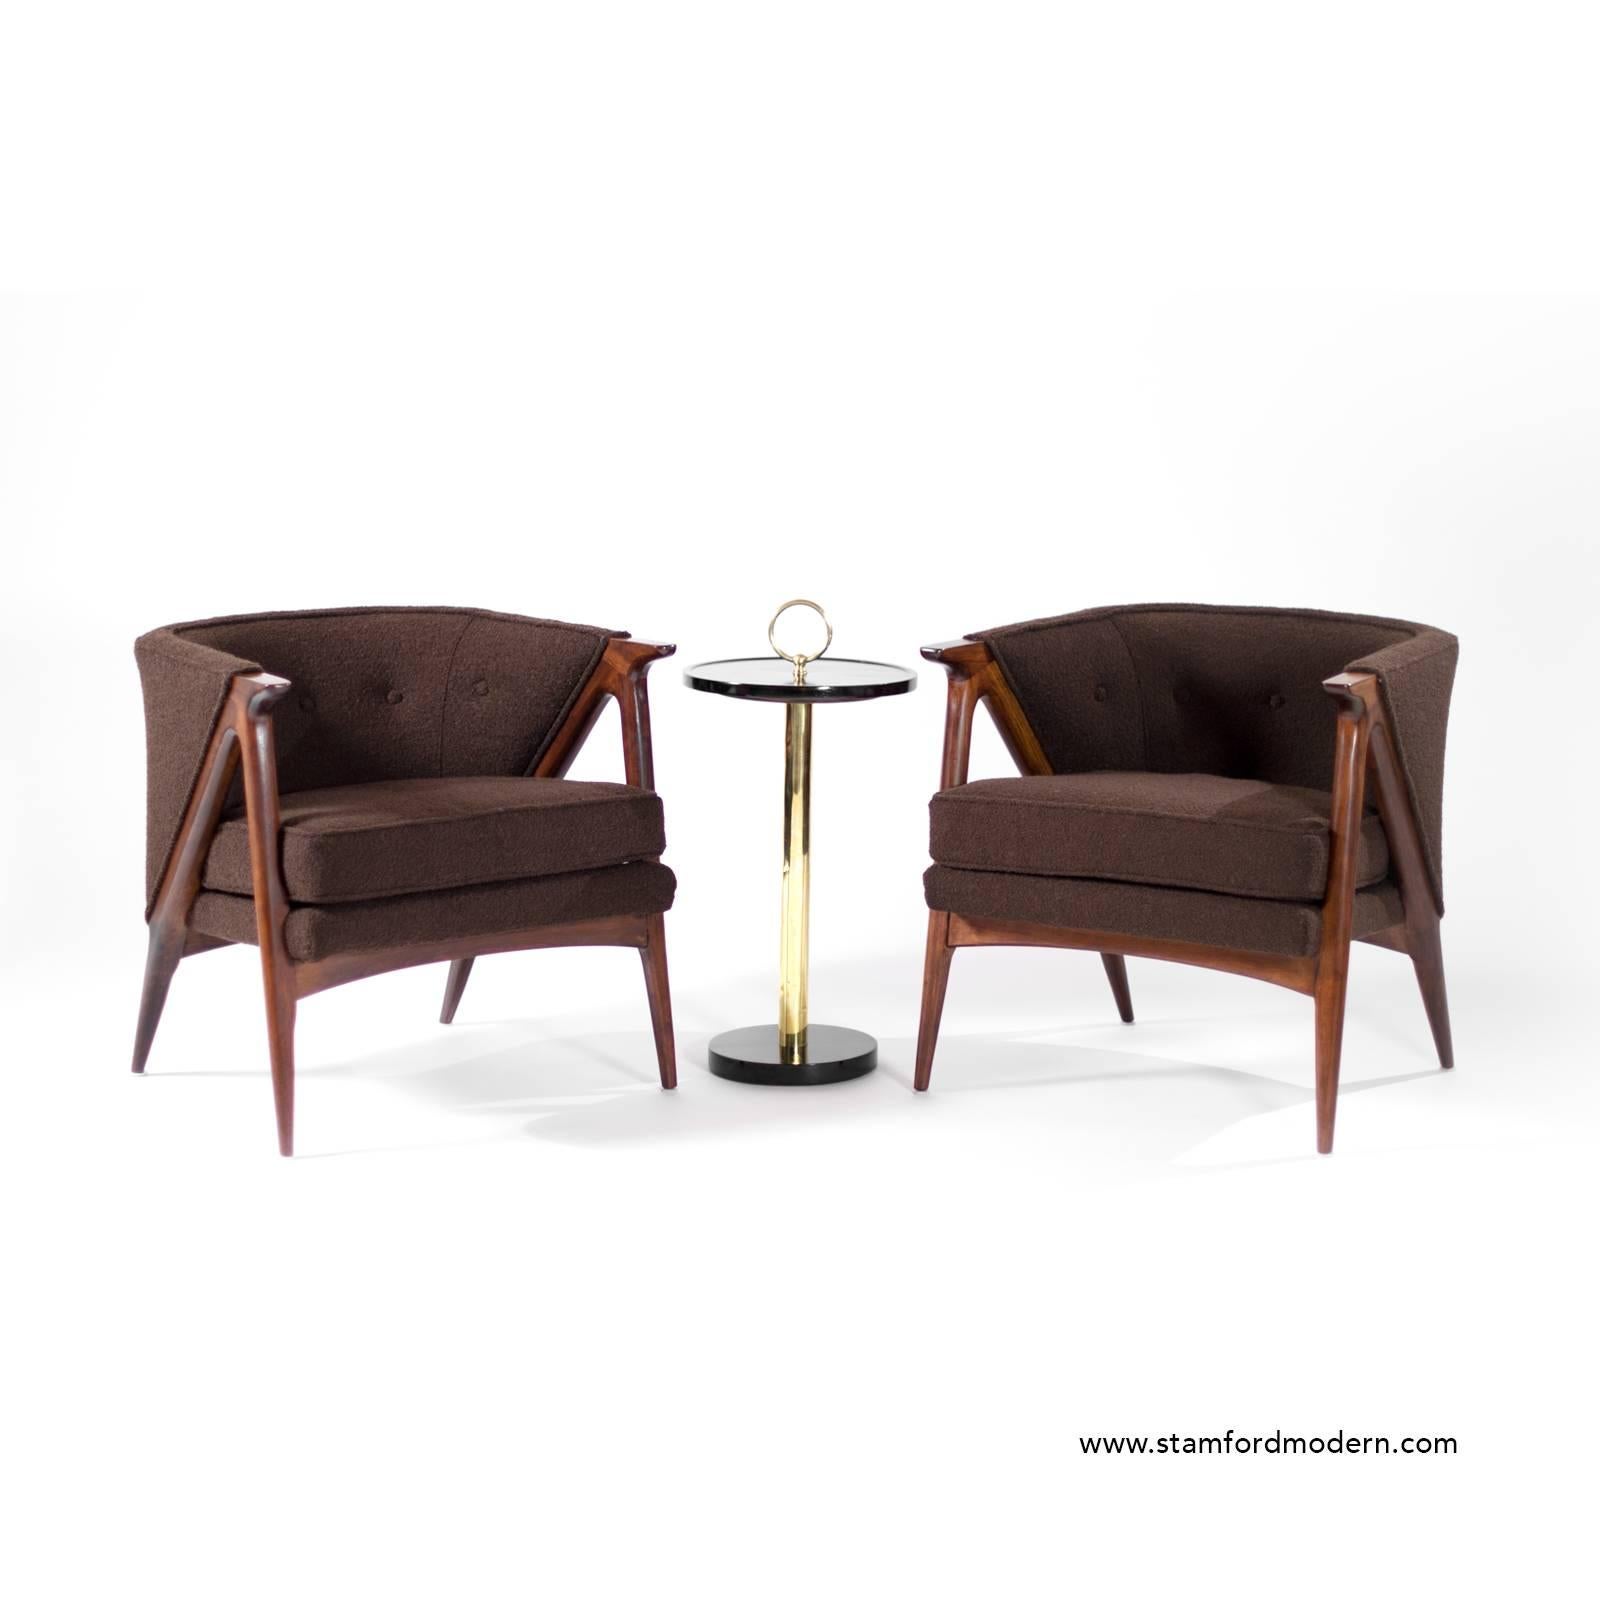 Walnut Pair of Sculptural Danish Modern Lounge Chairs, 1950s